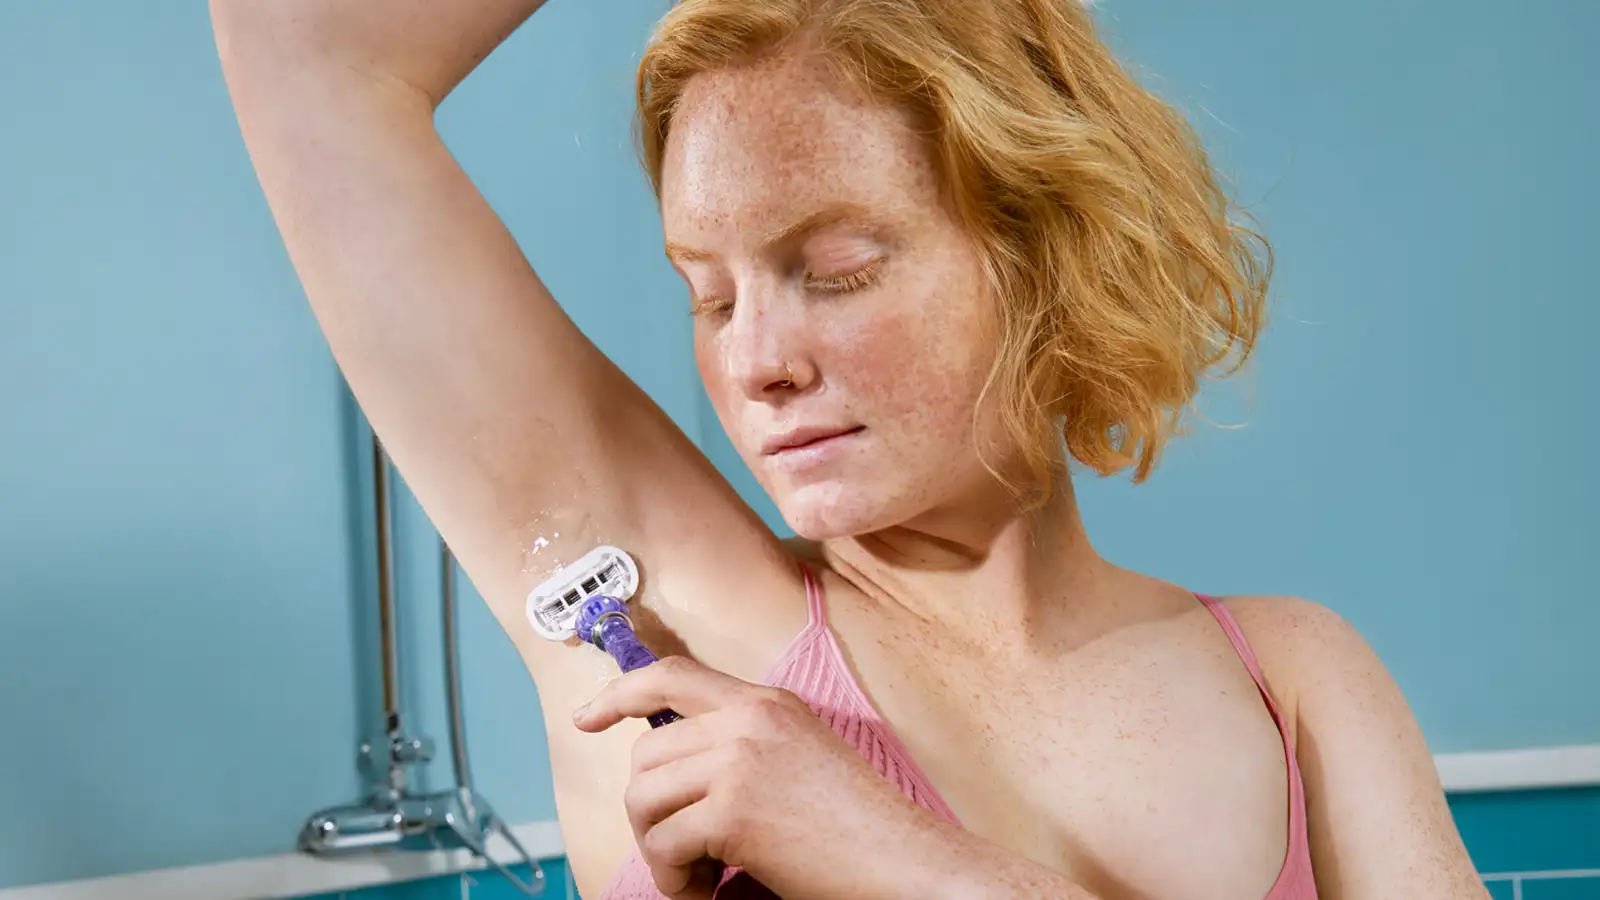 Blonde woman shaving her underarm